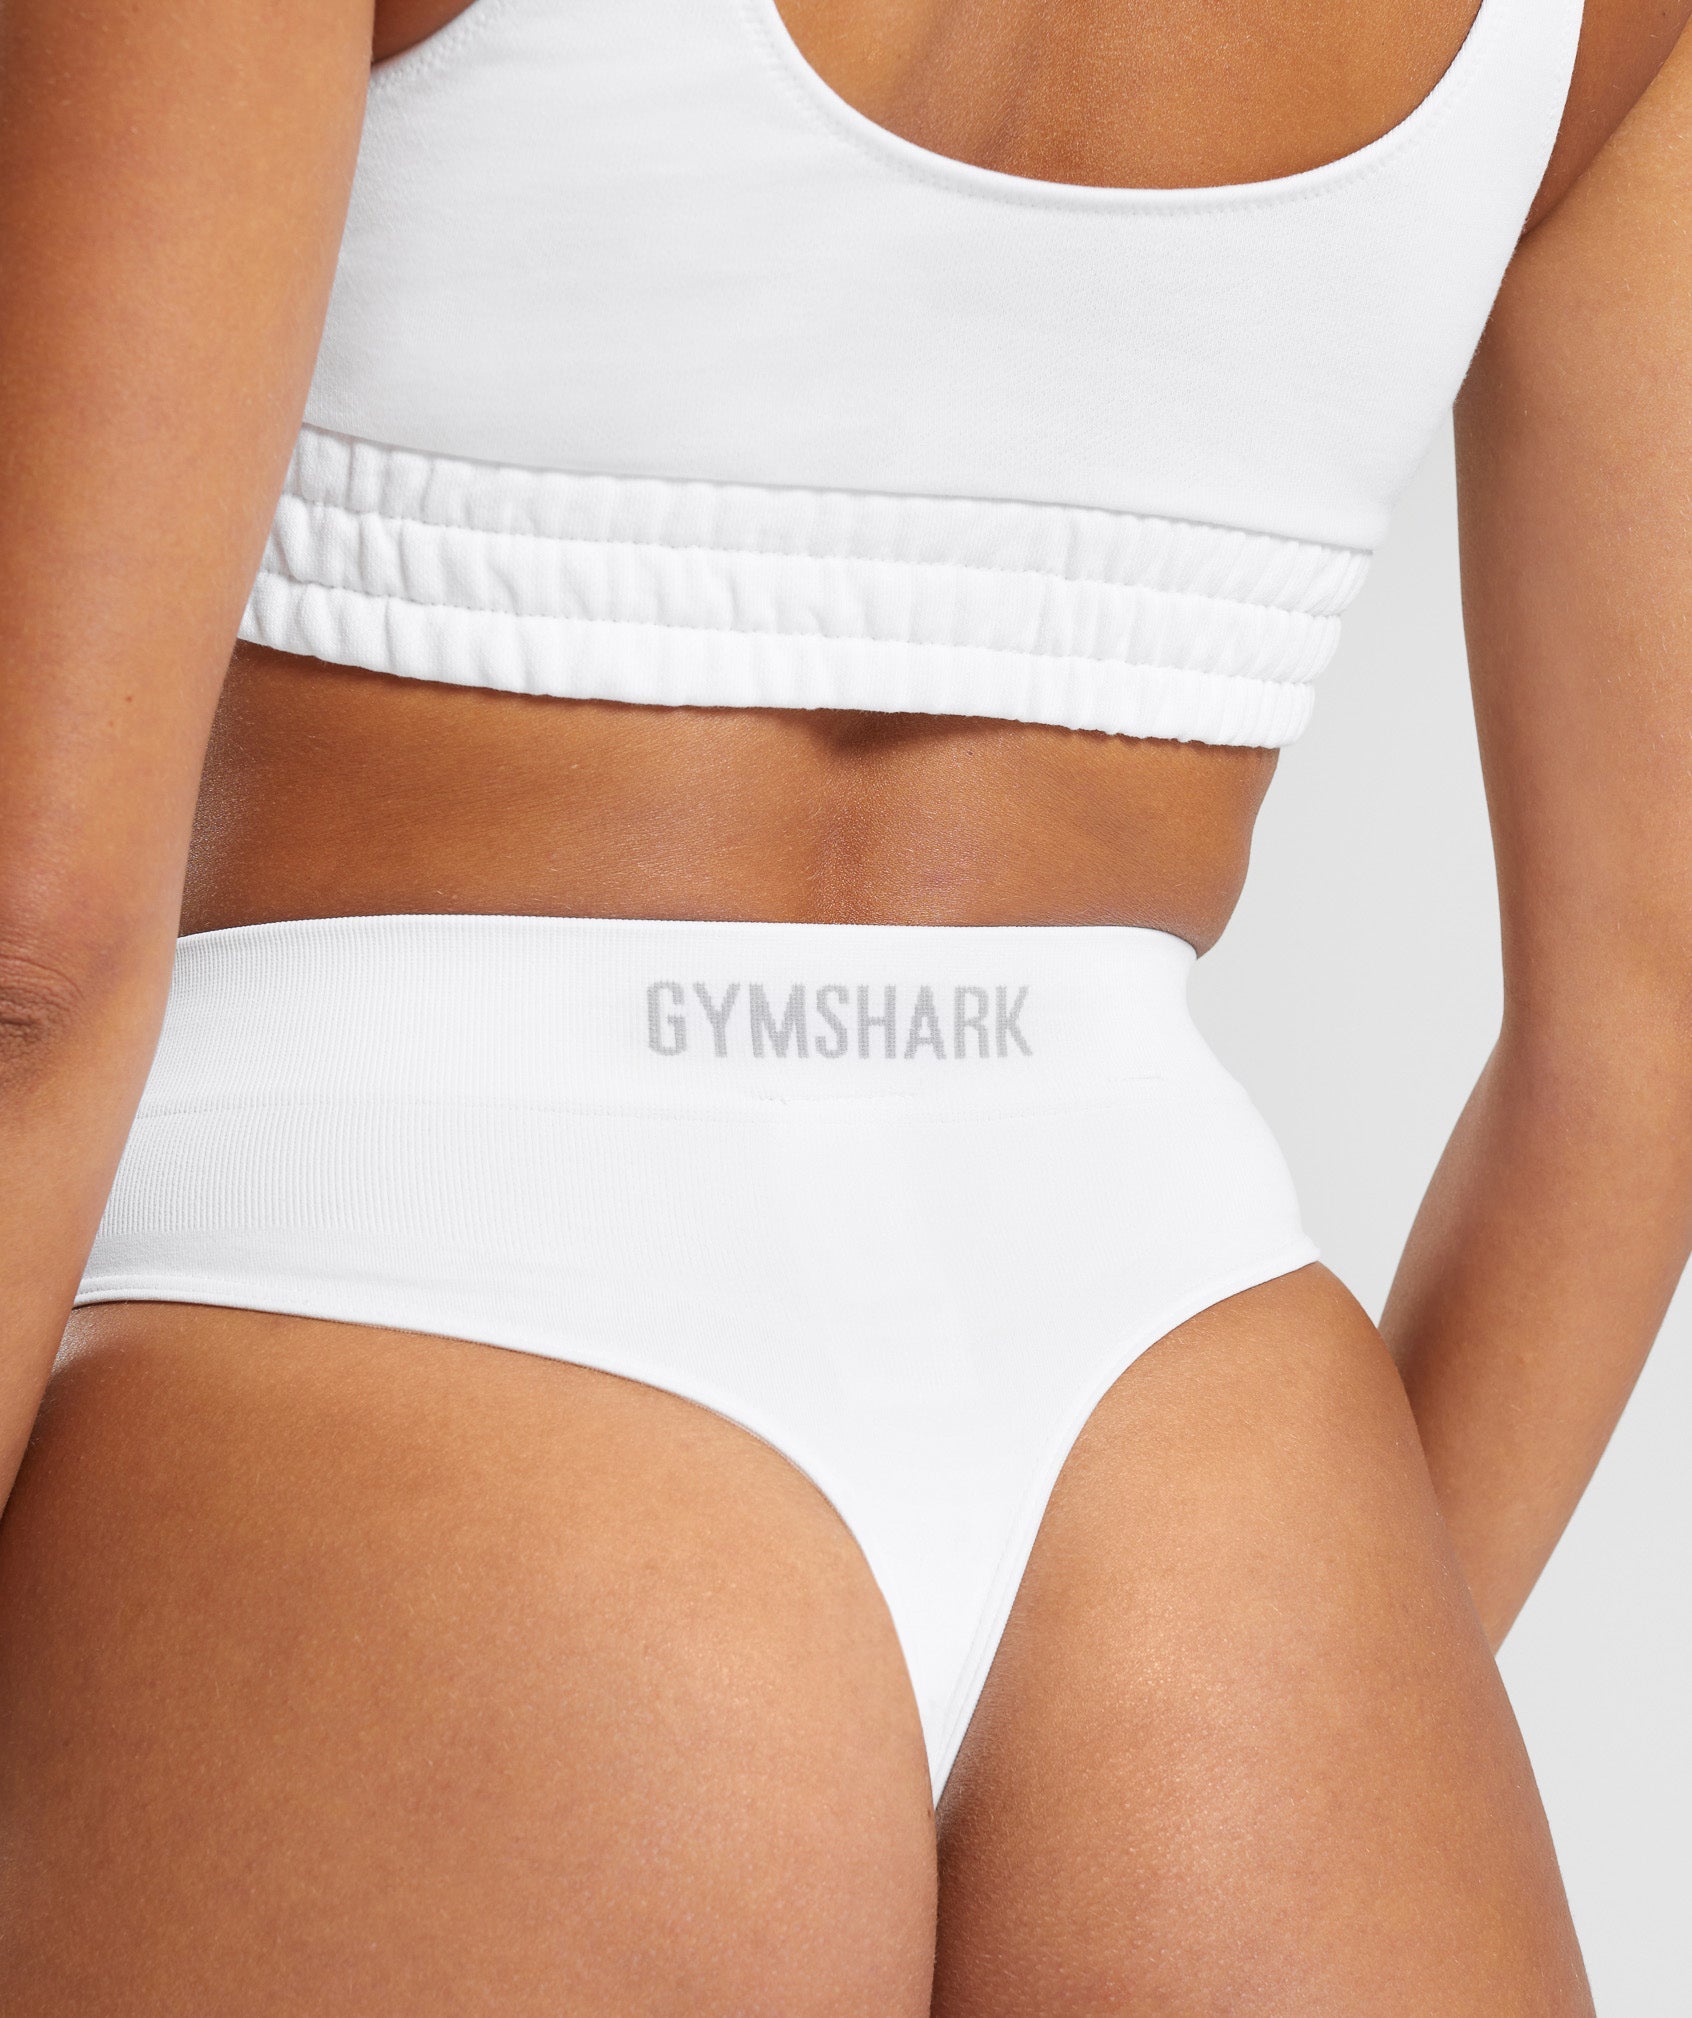 Gymshark Boxers 3 PK - White/Light Grey Core Marl/Black